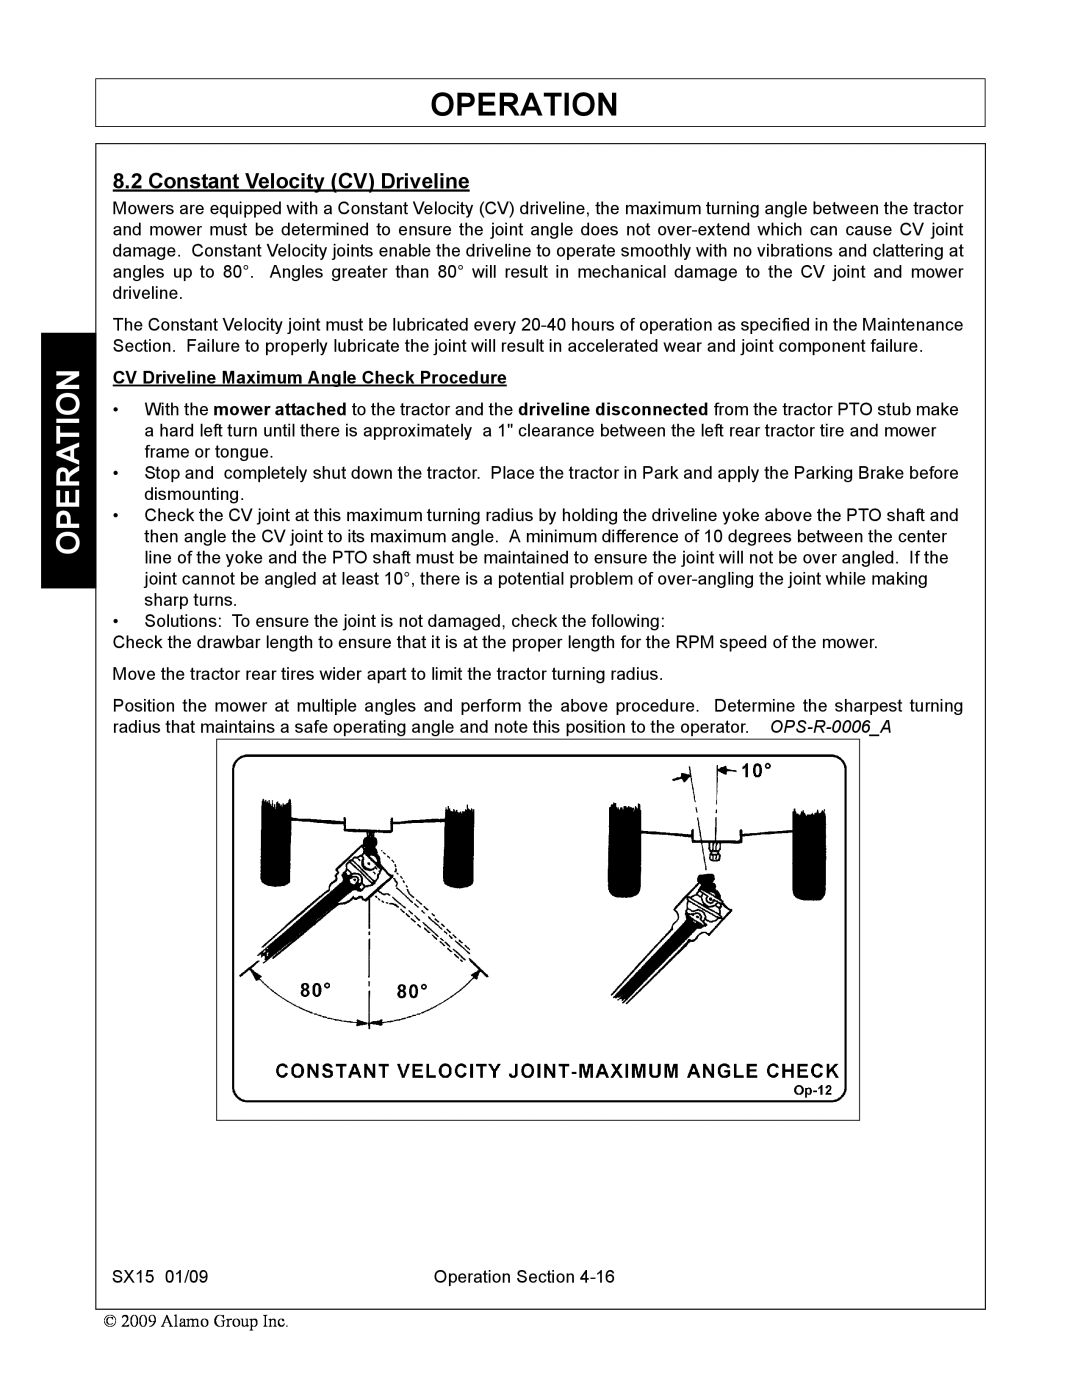 Alamo SX15 manual Constant Velocity CV Driveline, Operation, CV Driveline Maximum Angle Check Procedure 